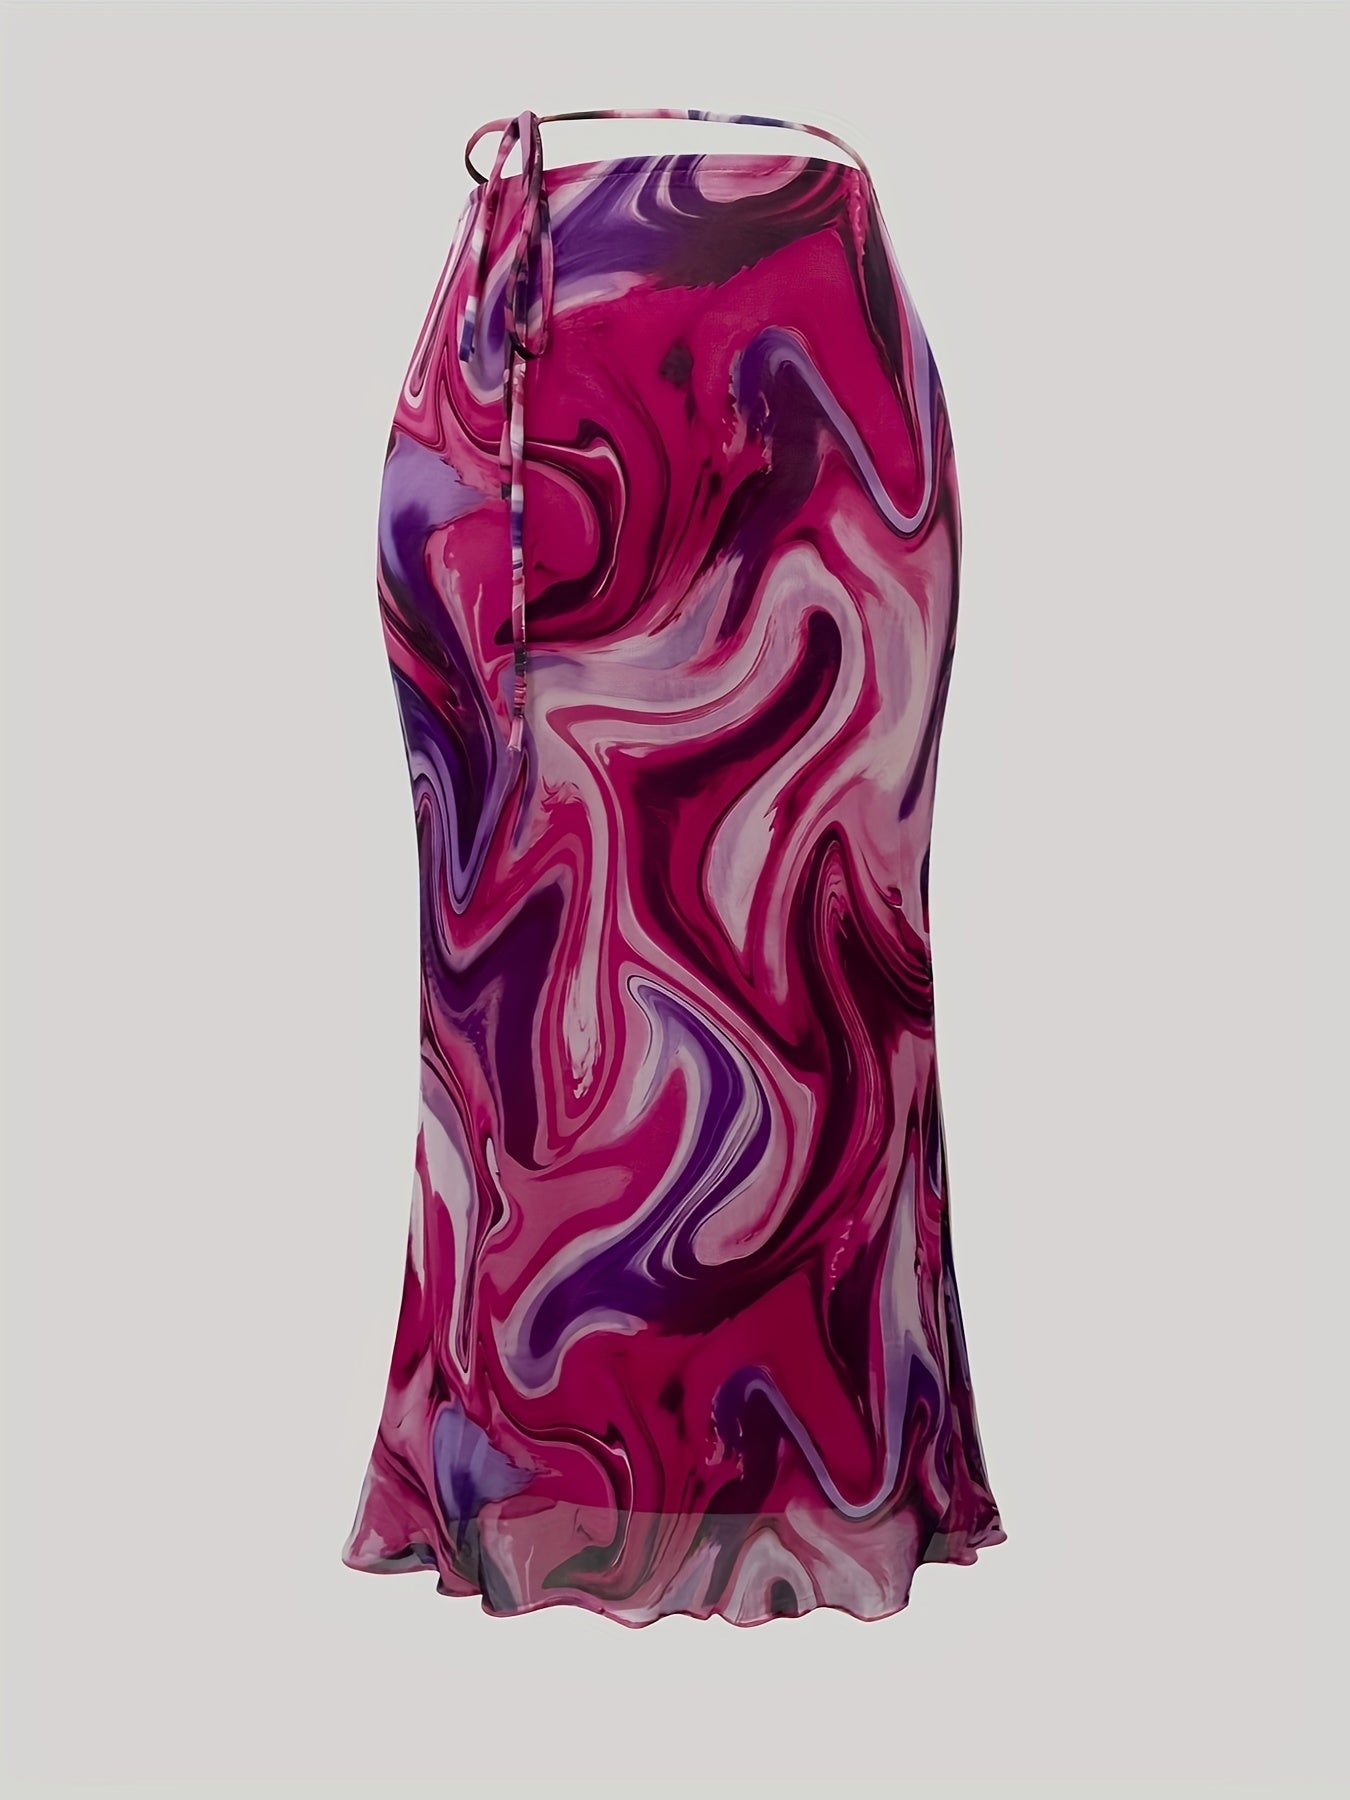 Antmvs All Over Print Tie Waist Mesh Skirt, Casual Skirt For Spring & Summer, Women's Clothing